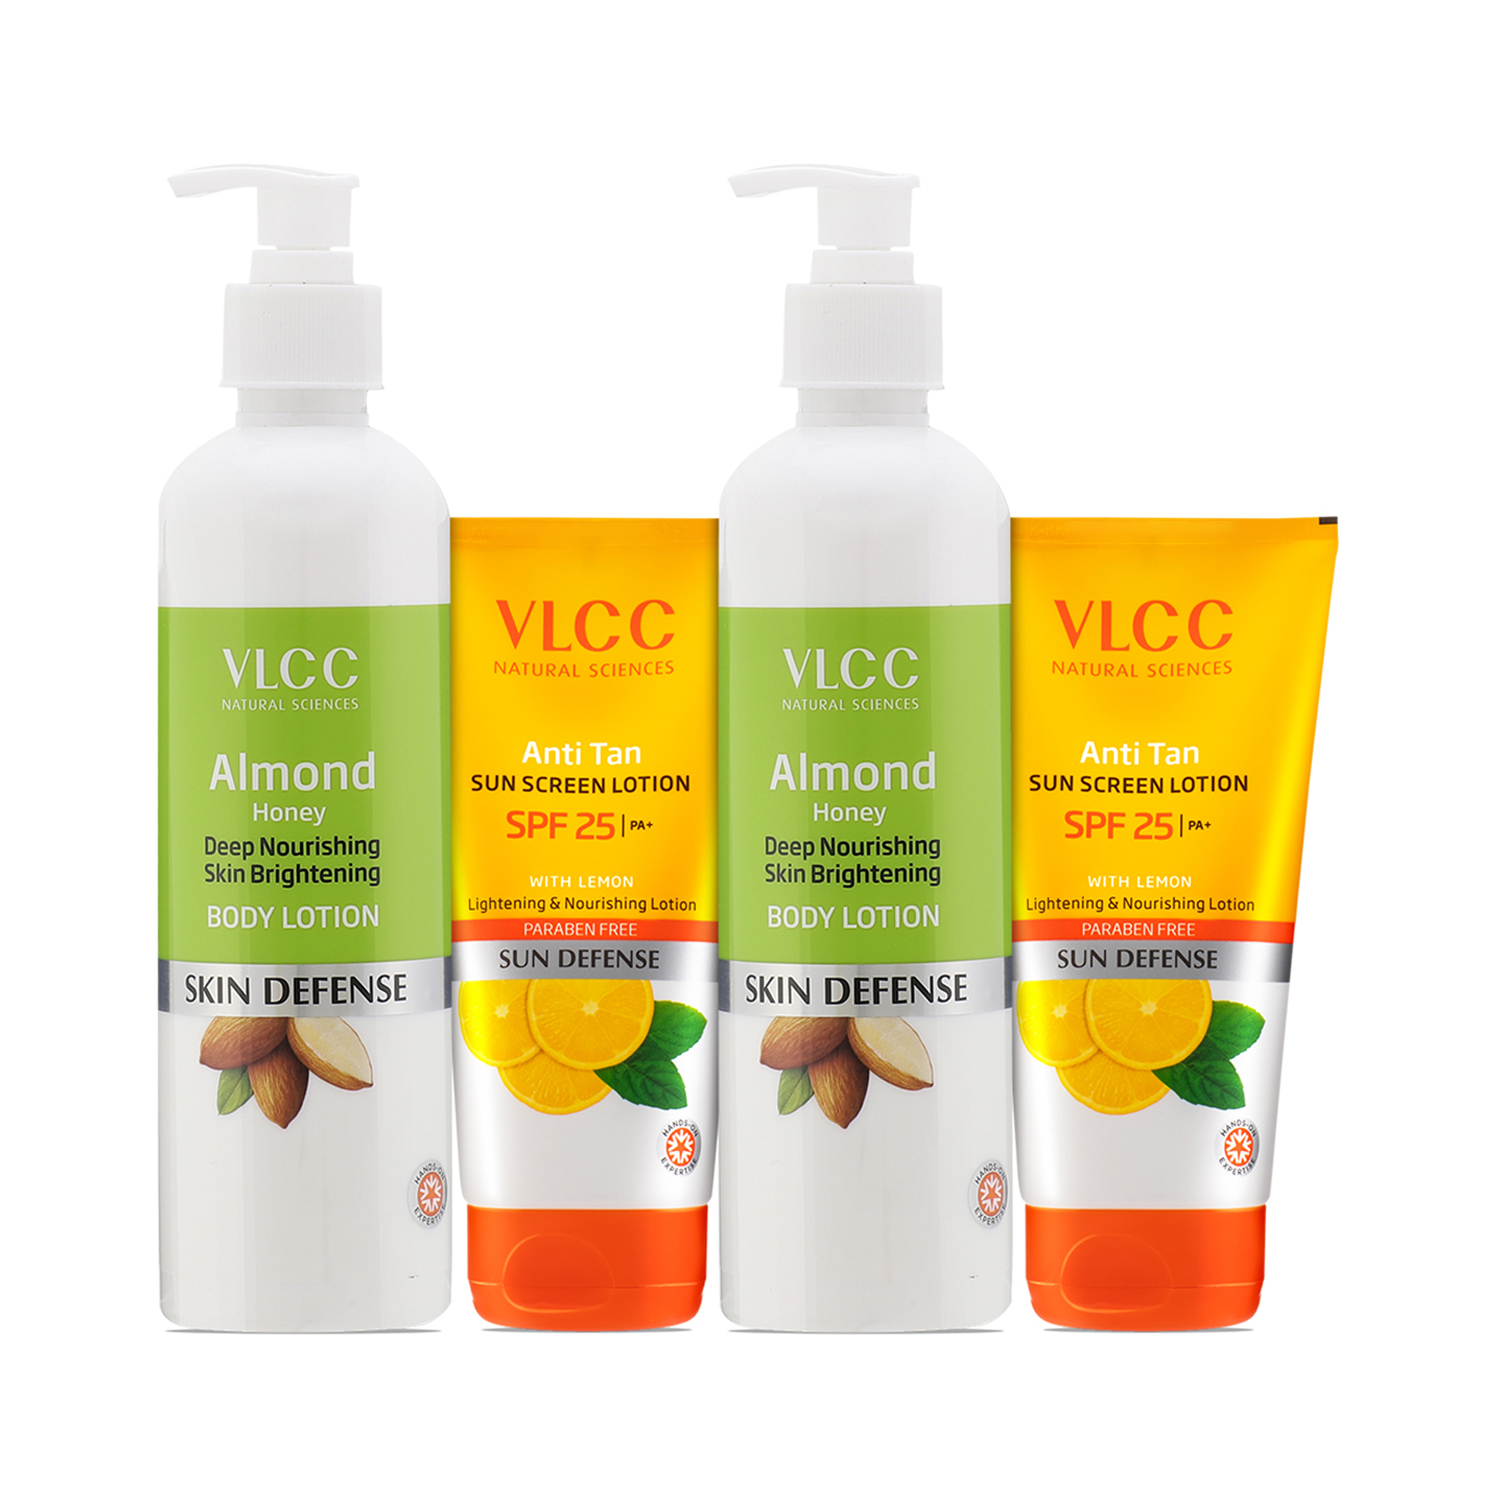 VLCC | VLCC Anti Tan Sun Screen Lotion SPF 25 & Almond Honey Skin Brightening Body Lotion Combo